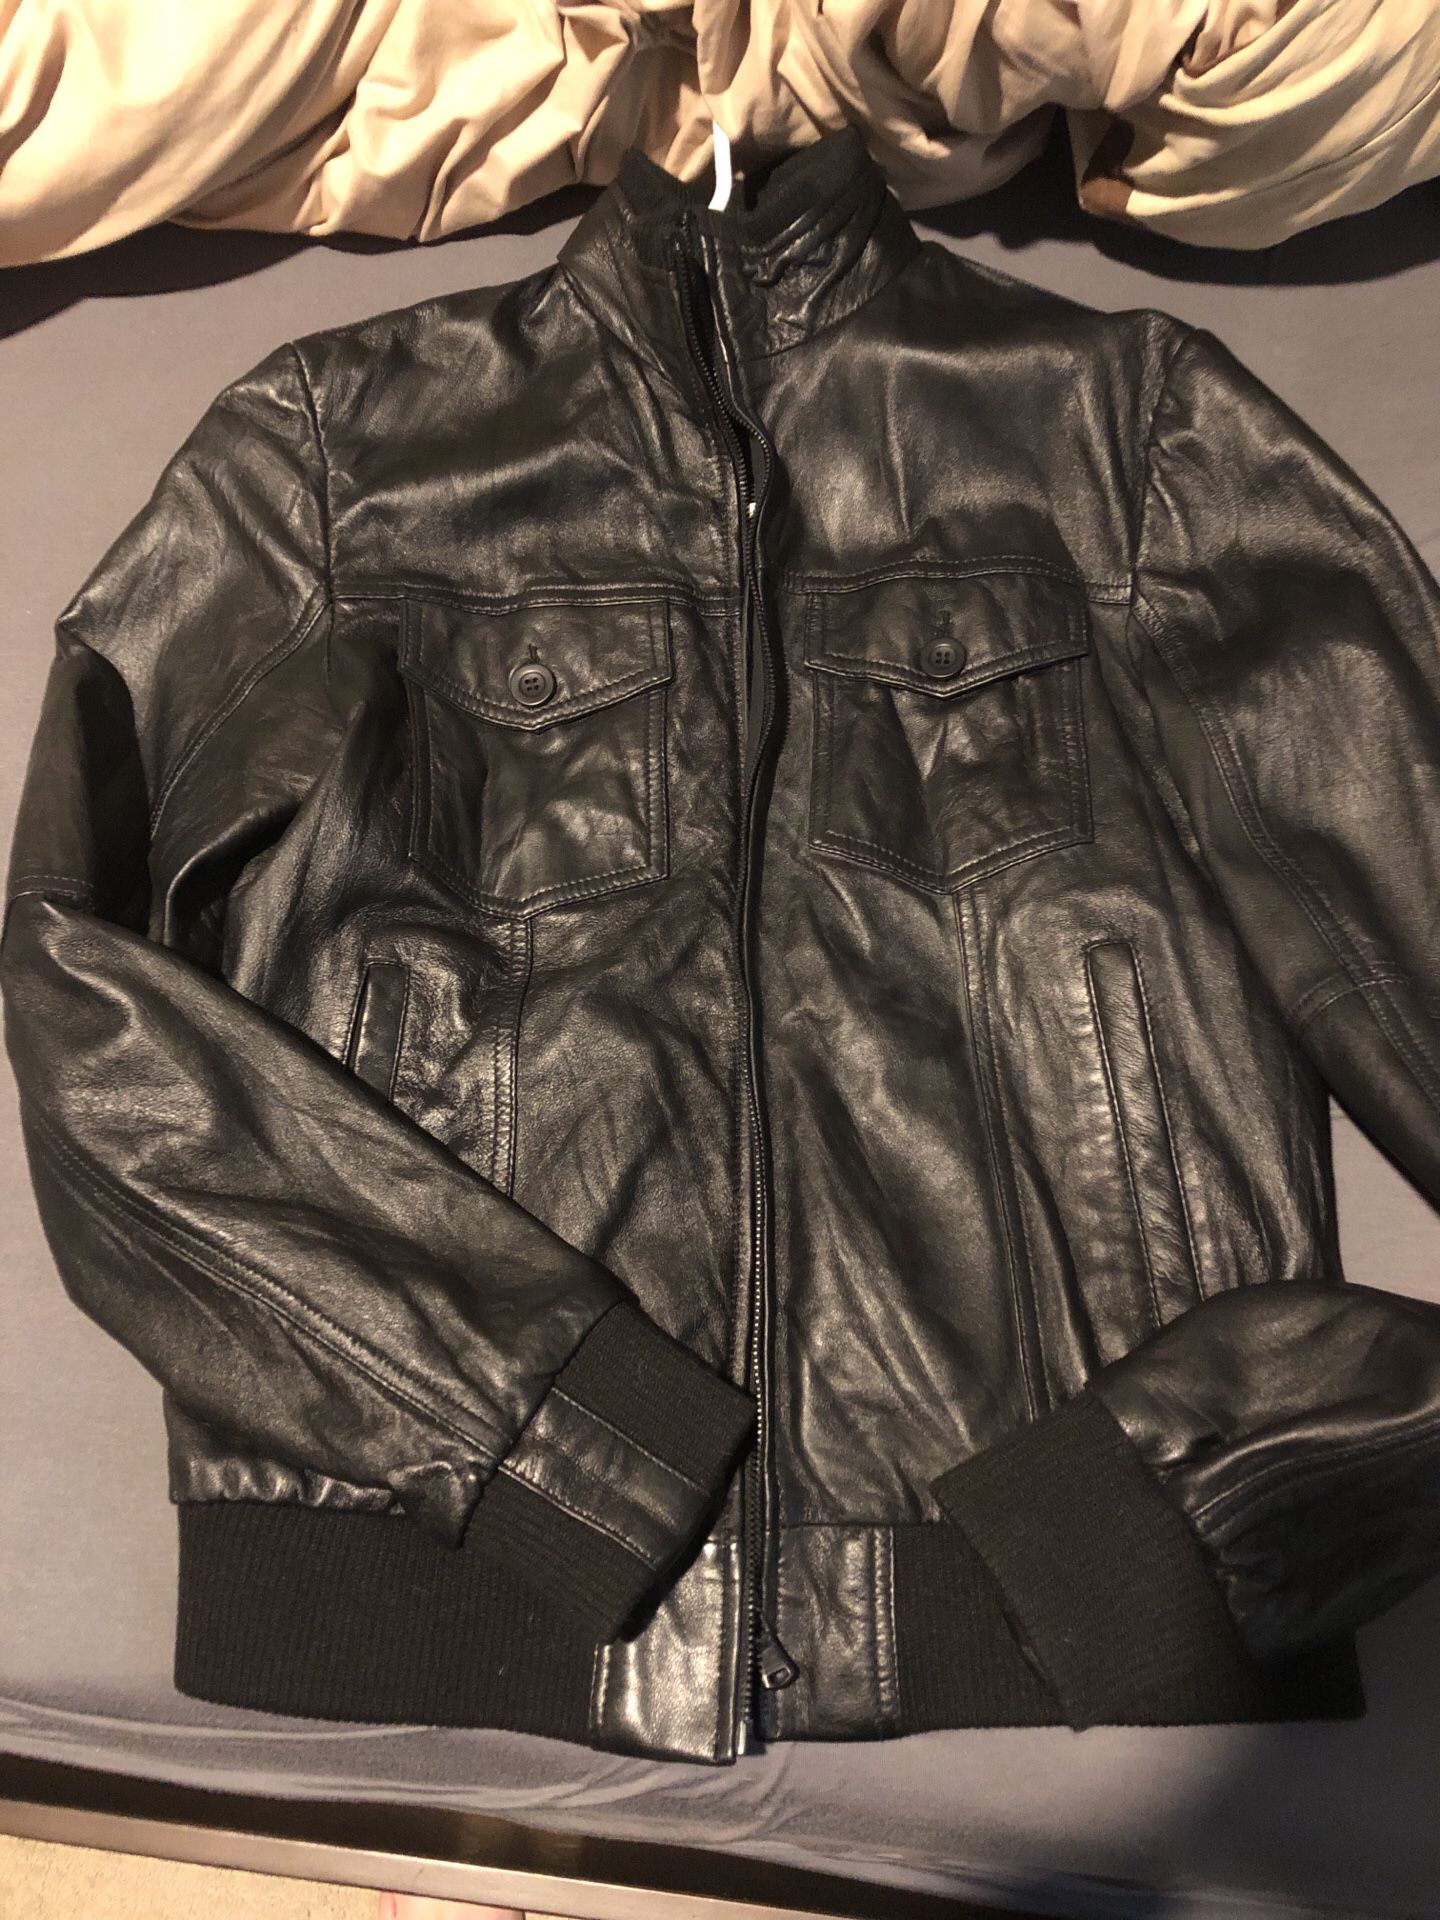 Men’s Zara leather jacket.